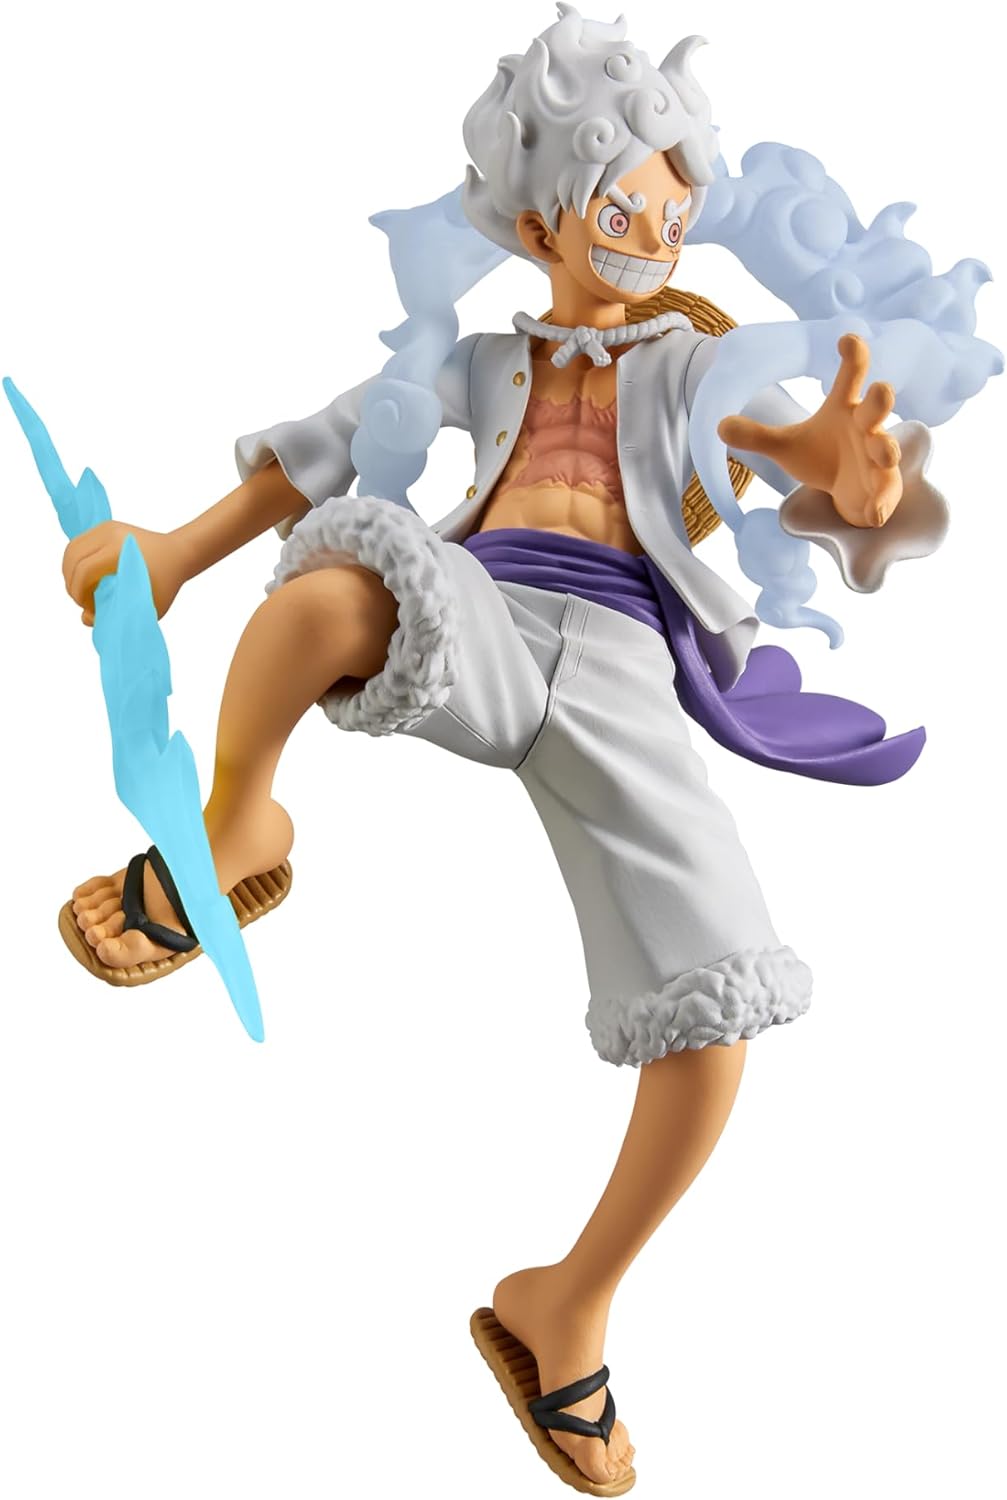 Banpresto - One Piece - DXF - The Grandline Series - Extra Monkey D. Luffy Gear 5 Figure